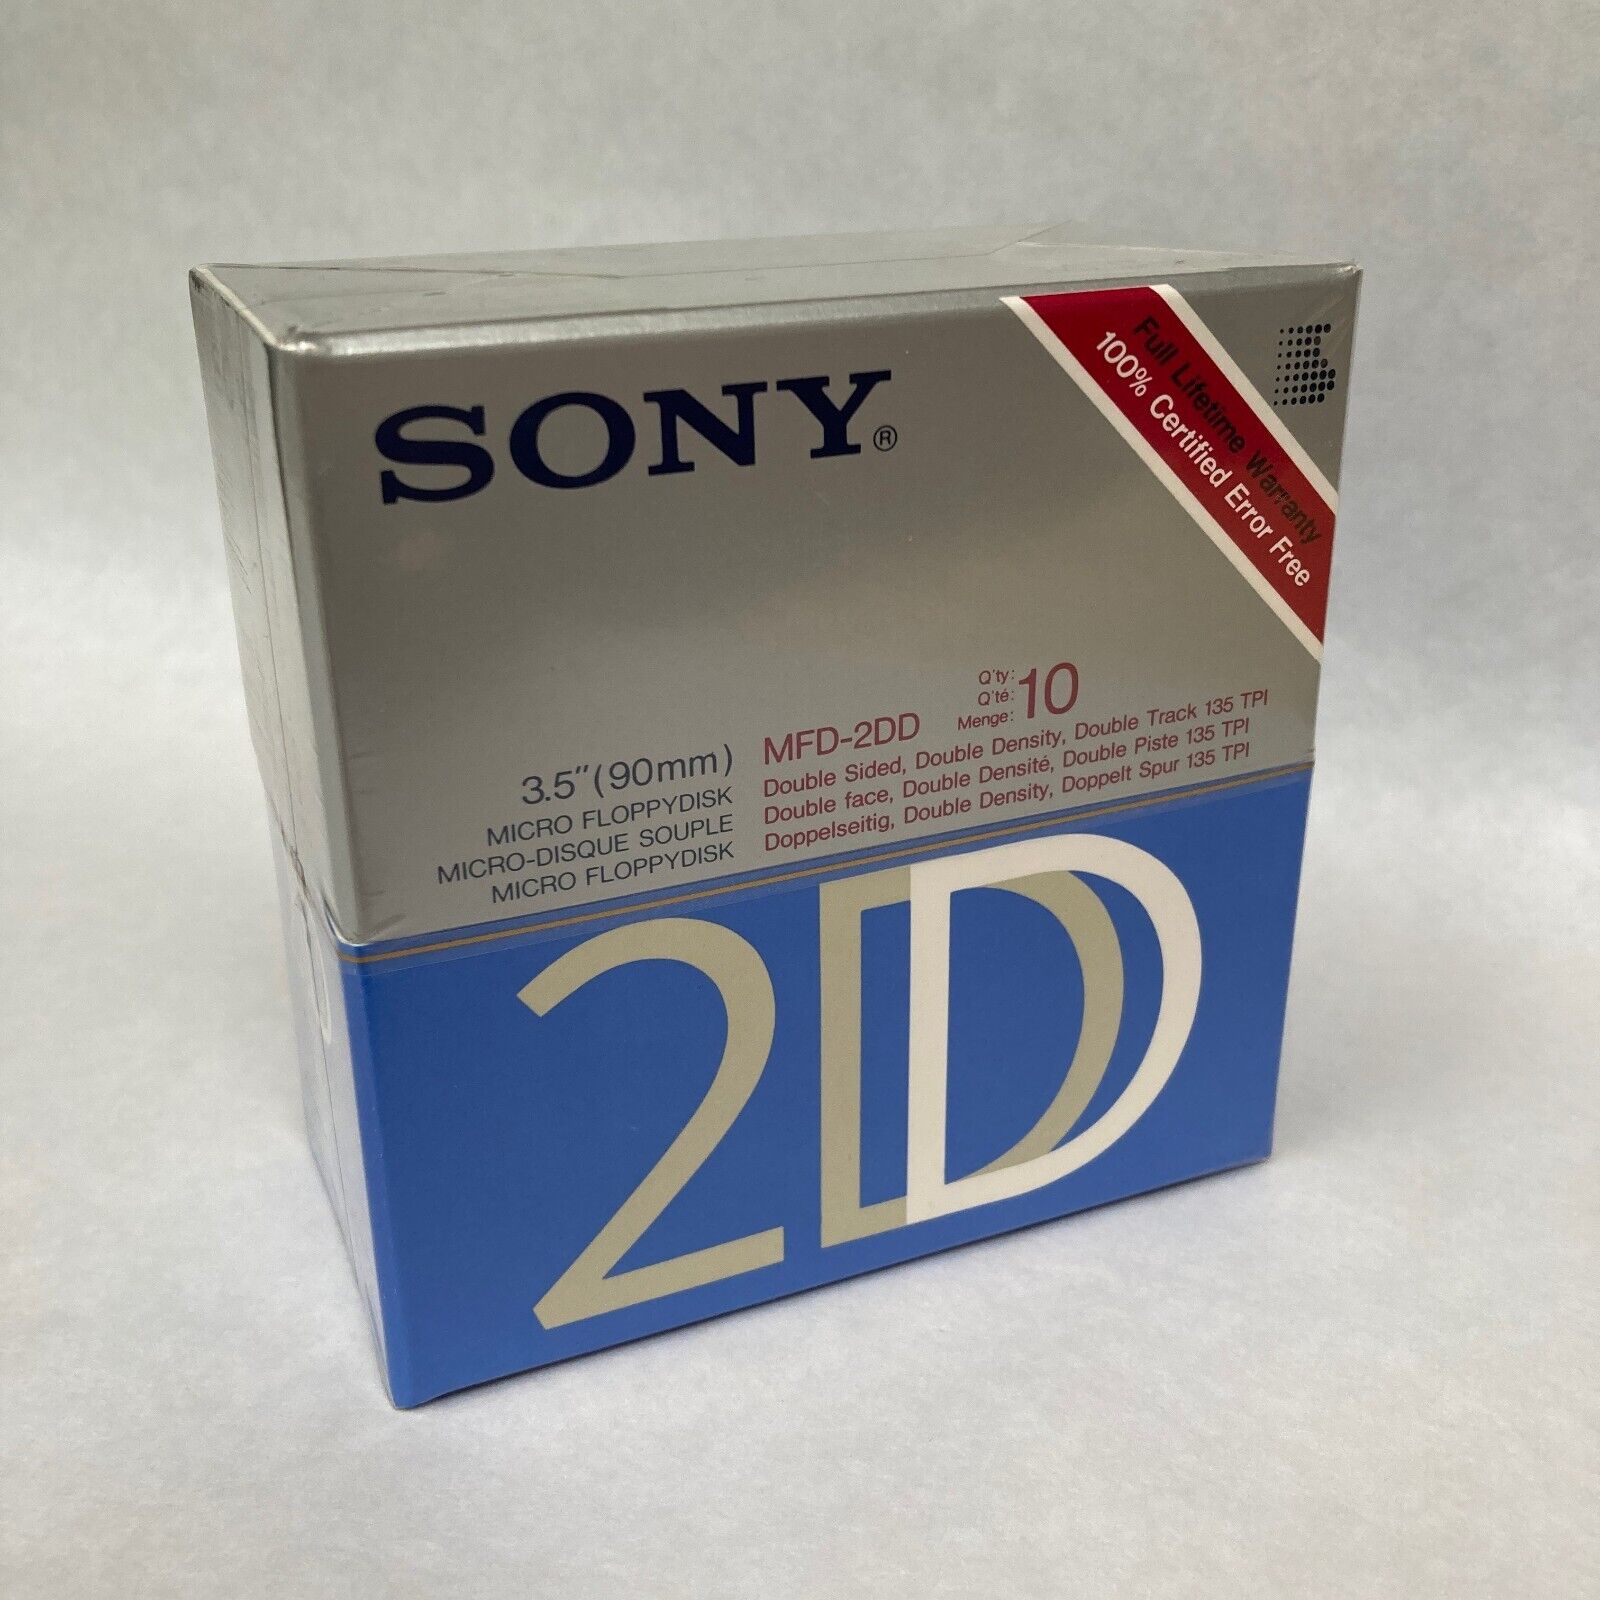 Sony MFD 2DD-3.5 Inch-1MB-10 pack (Micro Floppydisk Double Density) 135 TPI